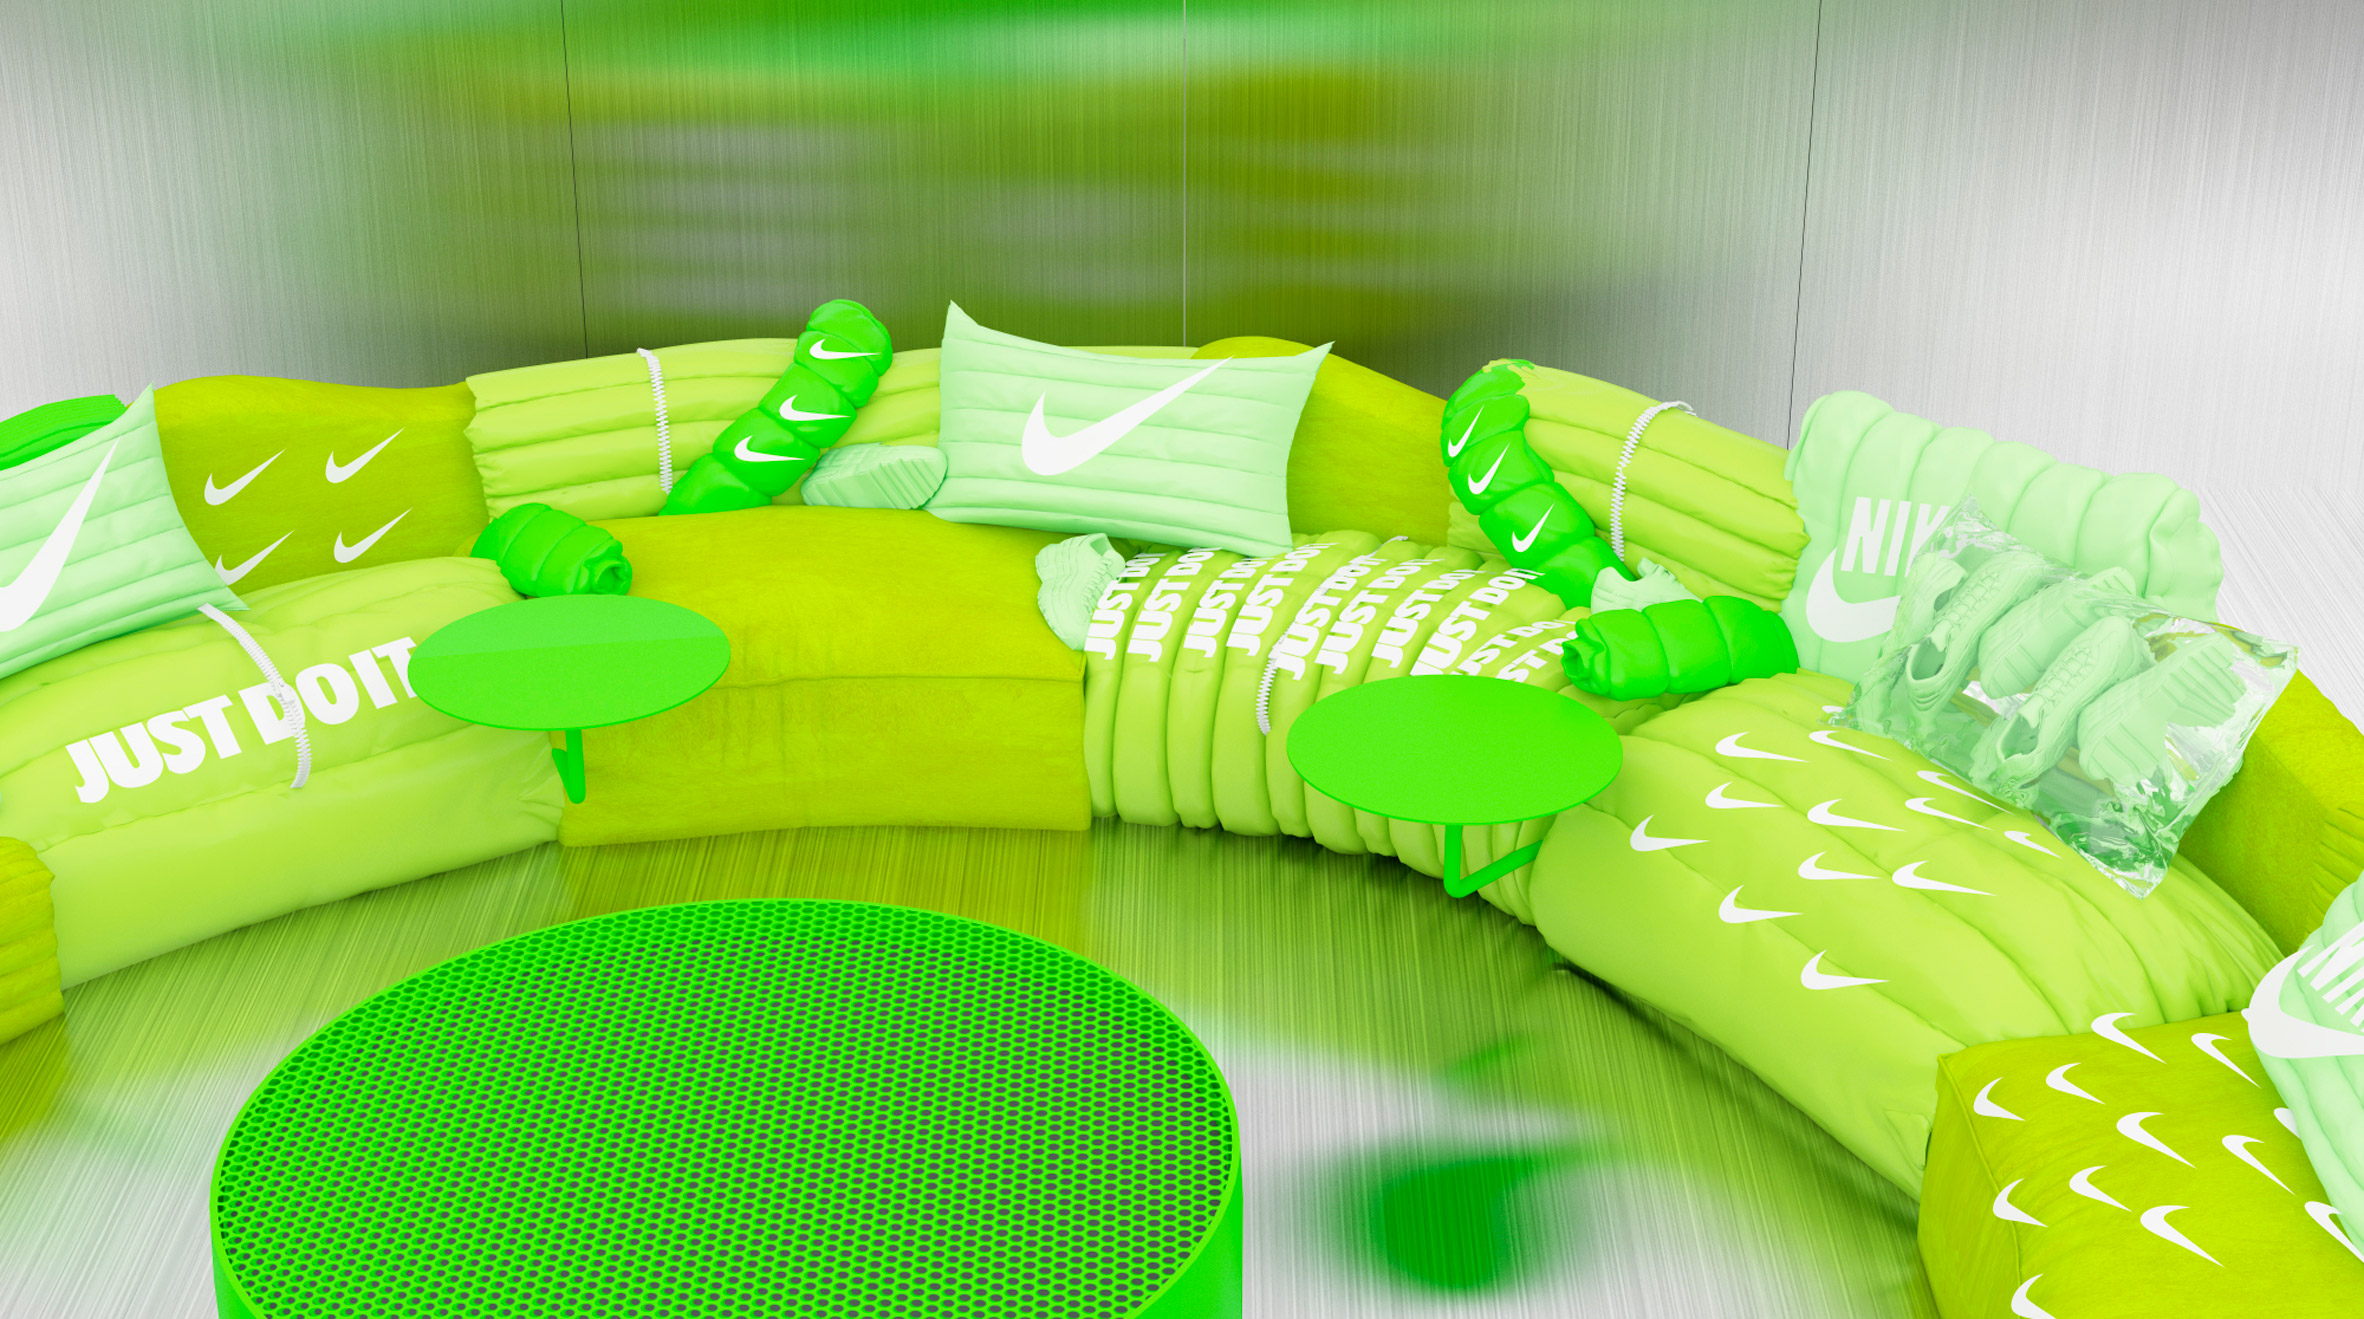 Crosby Studios designs upholstered green Nike